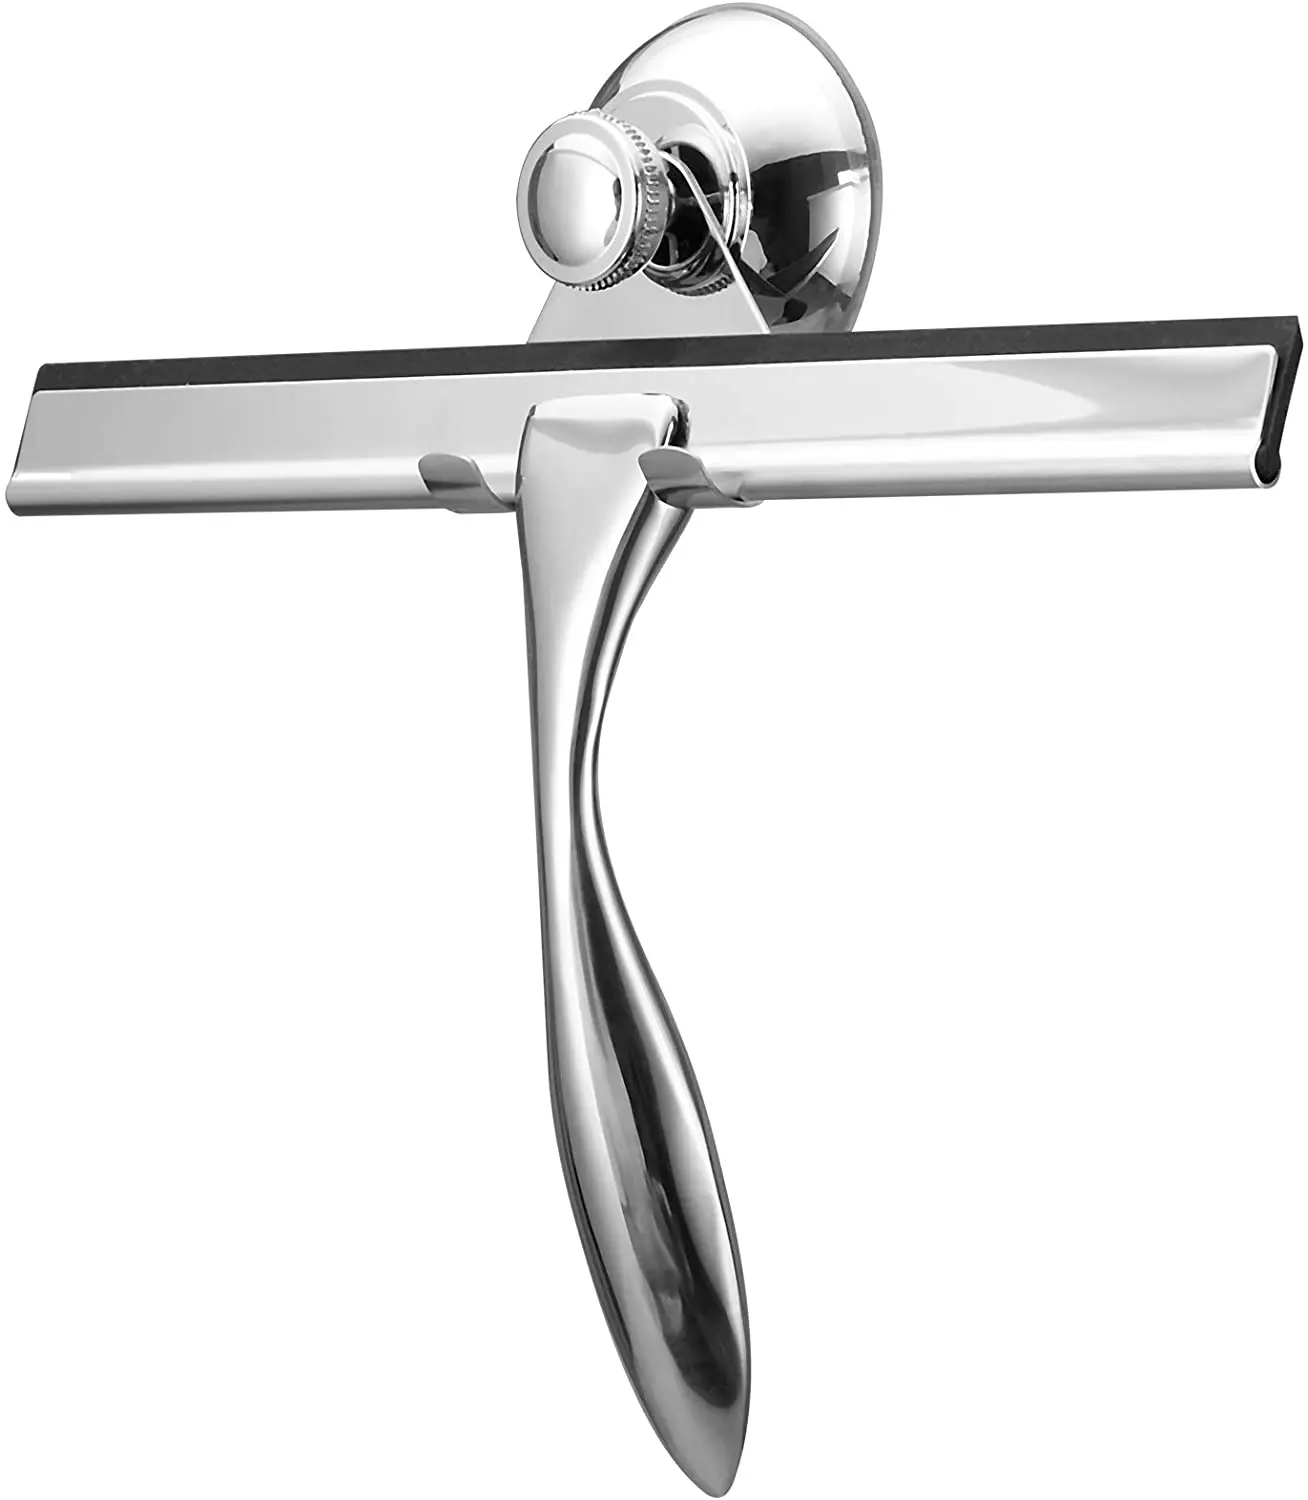 GLAMFIELDS Shower Squeegee Silver, 10inch Stainless Steel Shower Scraper Wiper for Bathroom Mirror Window and Car Glass 